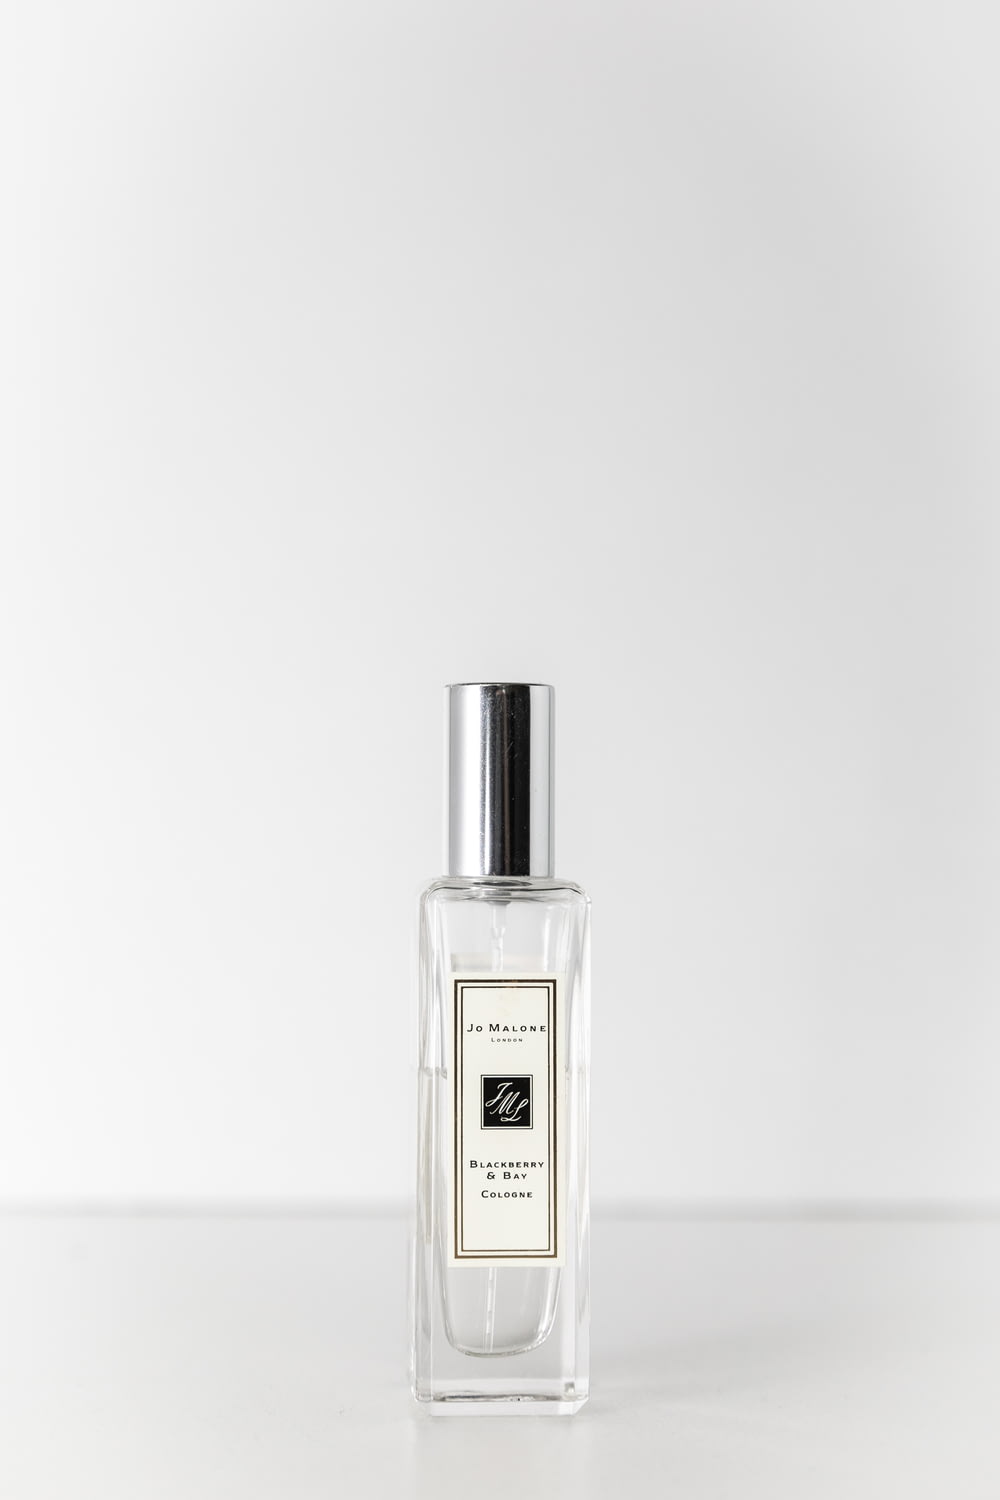 Jo Malone fragrance bottle on white surface